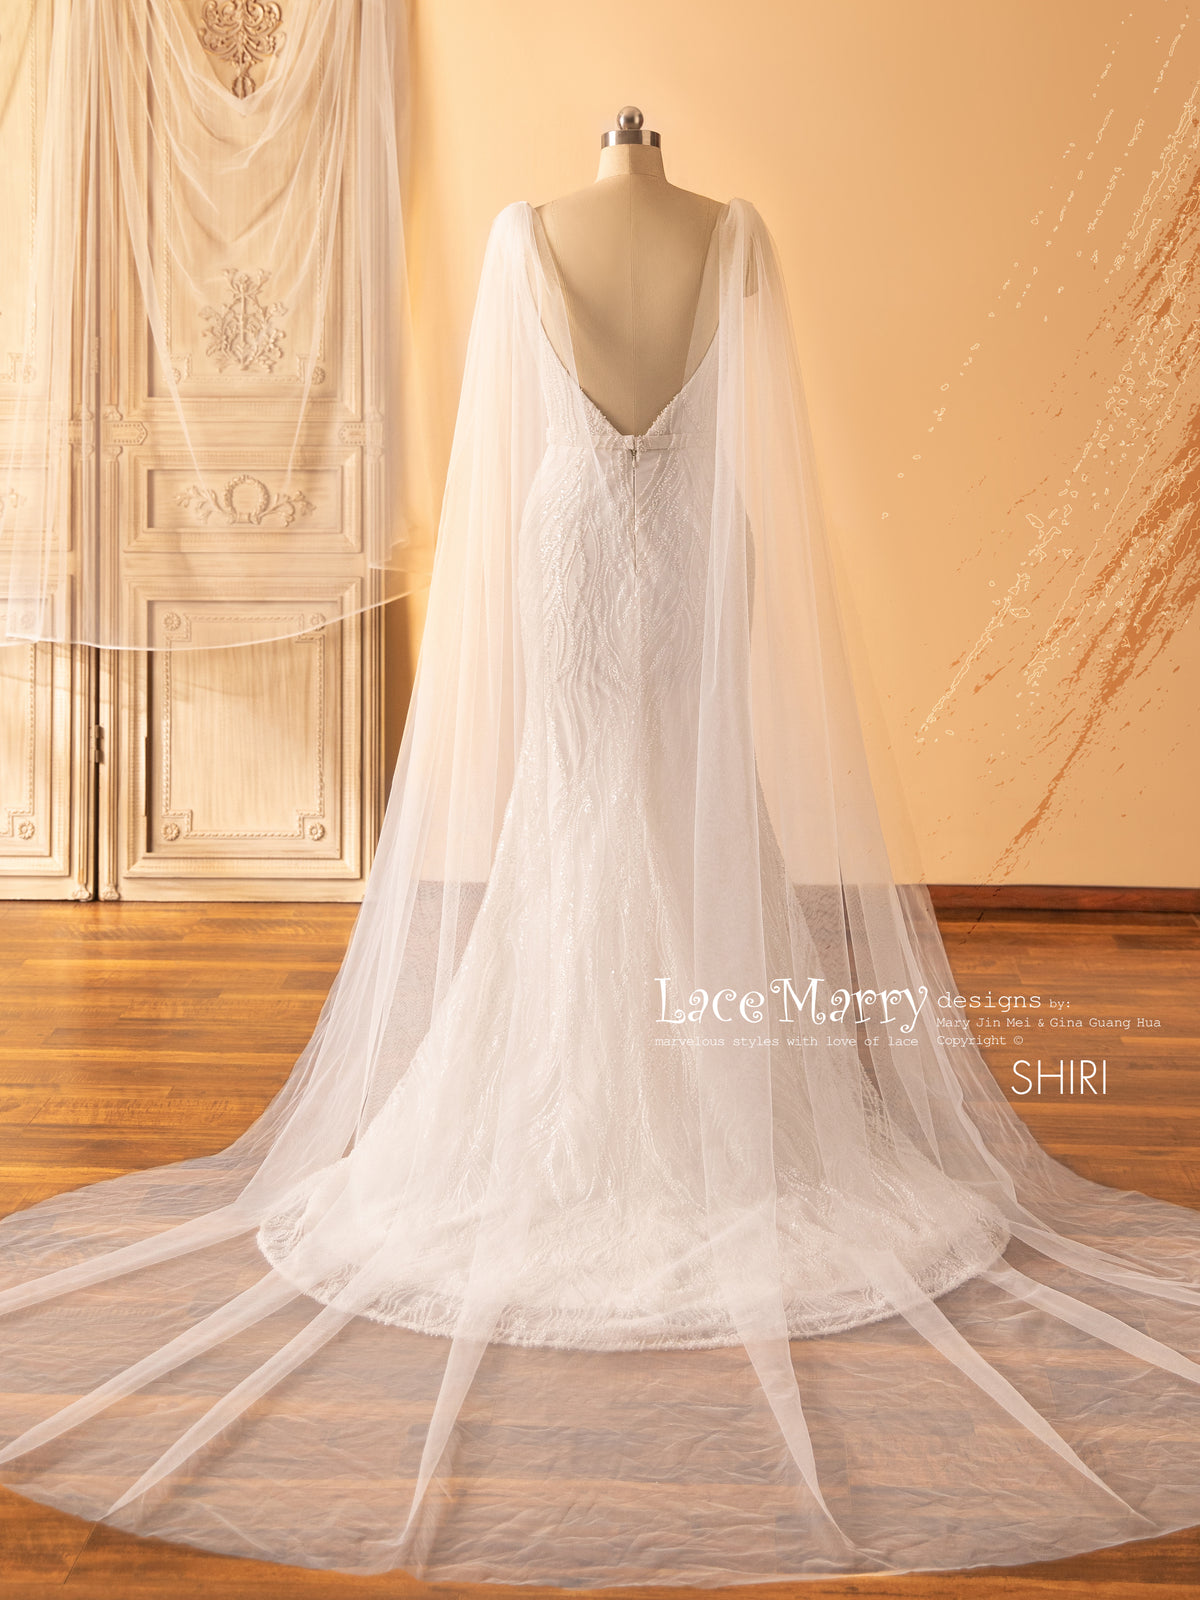 SHIRI / Square Neck Wedding Dress with Separate Cape